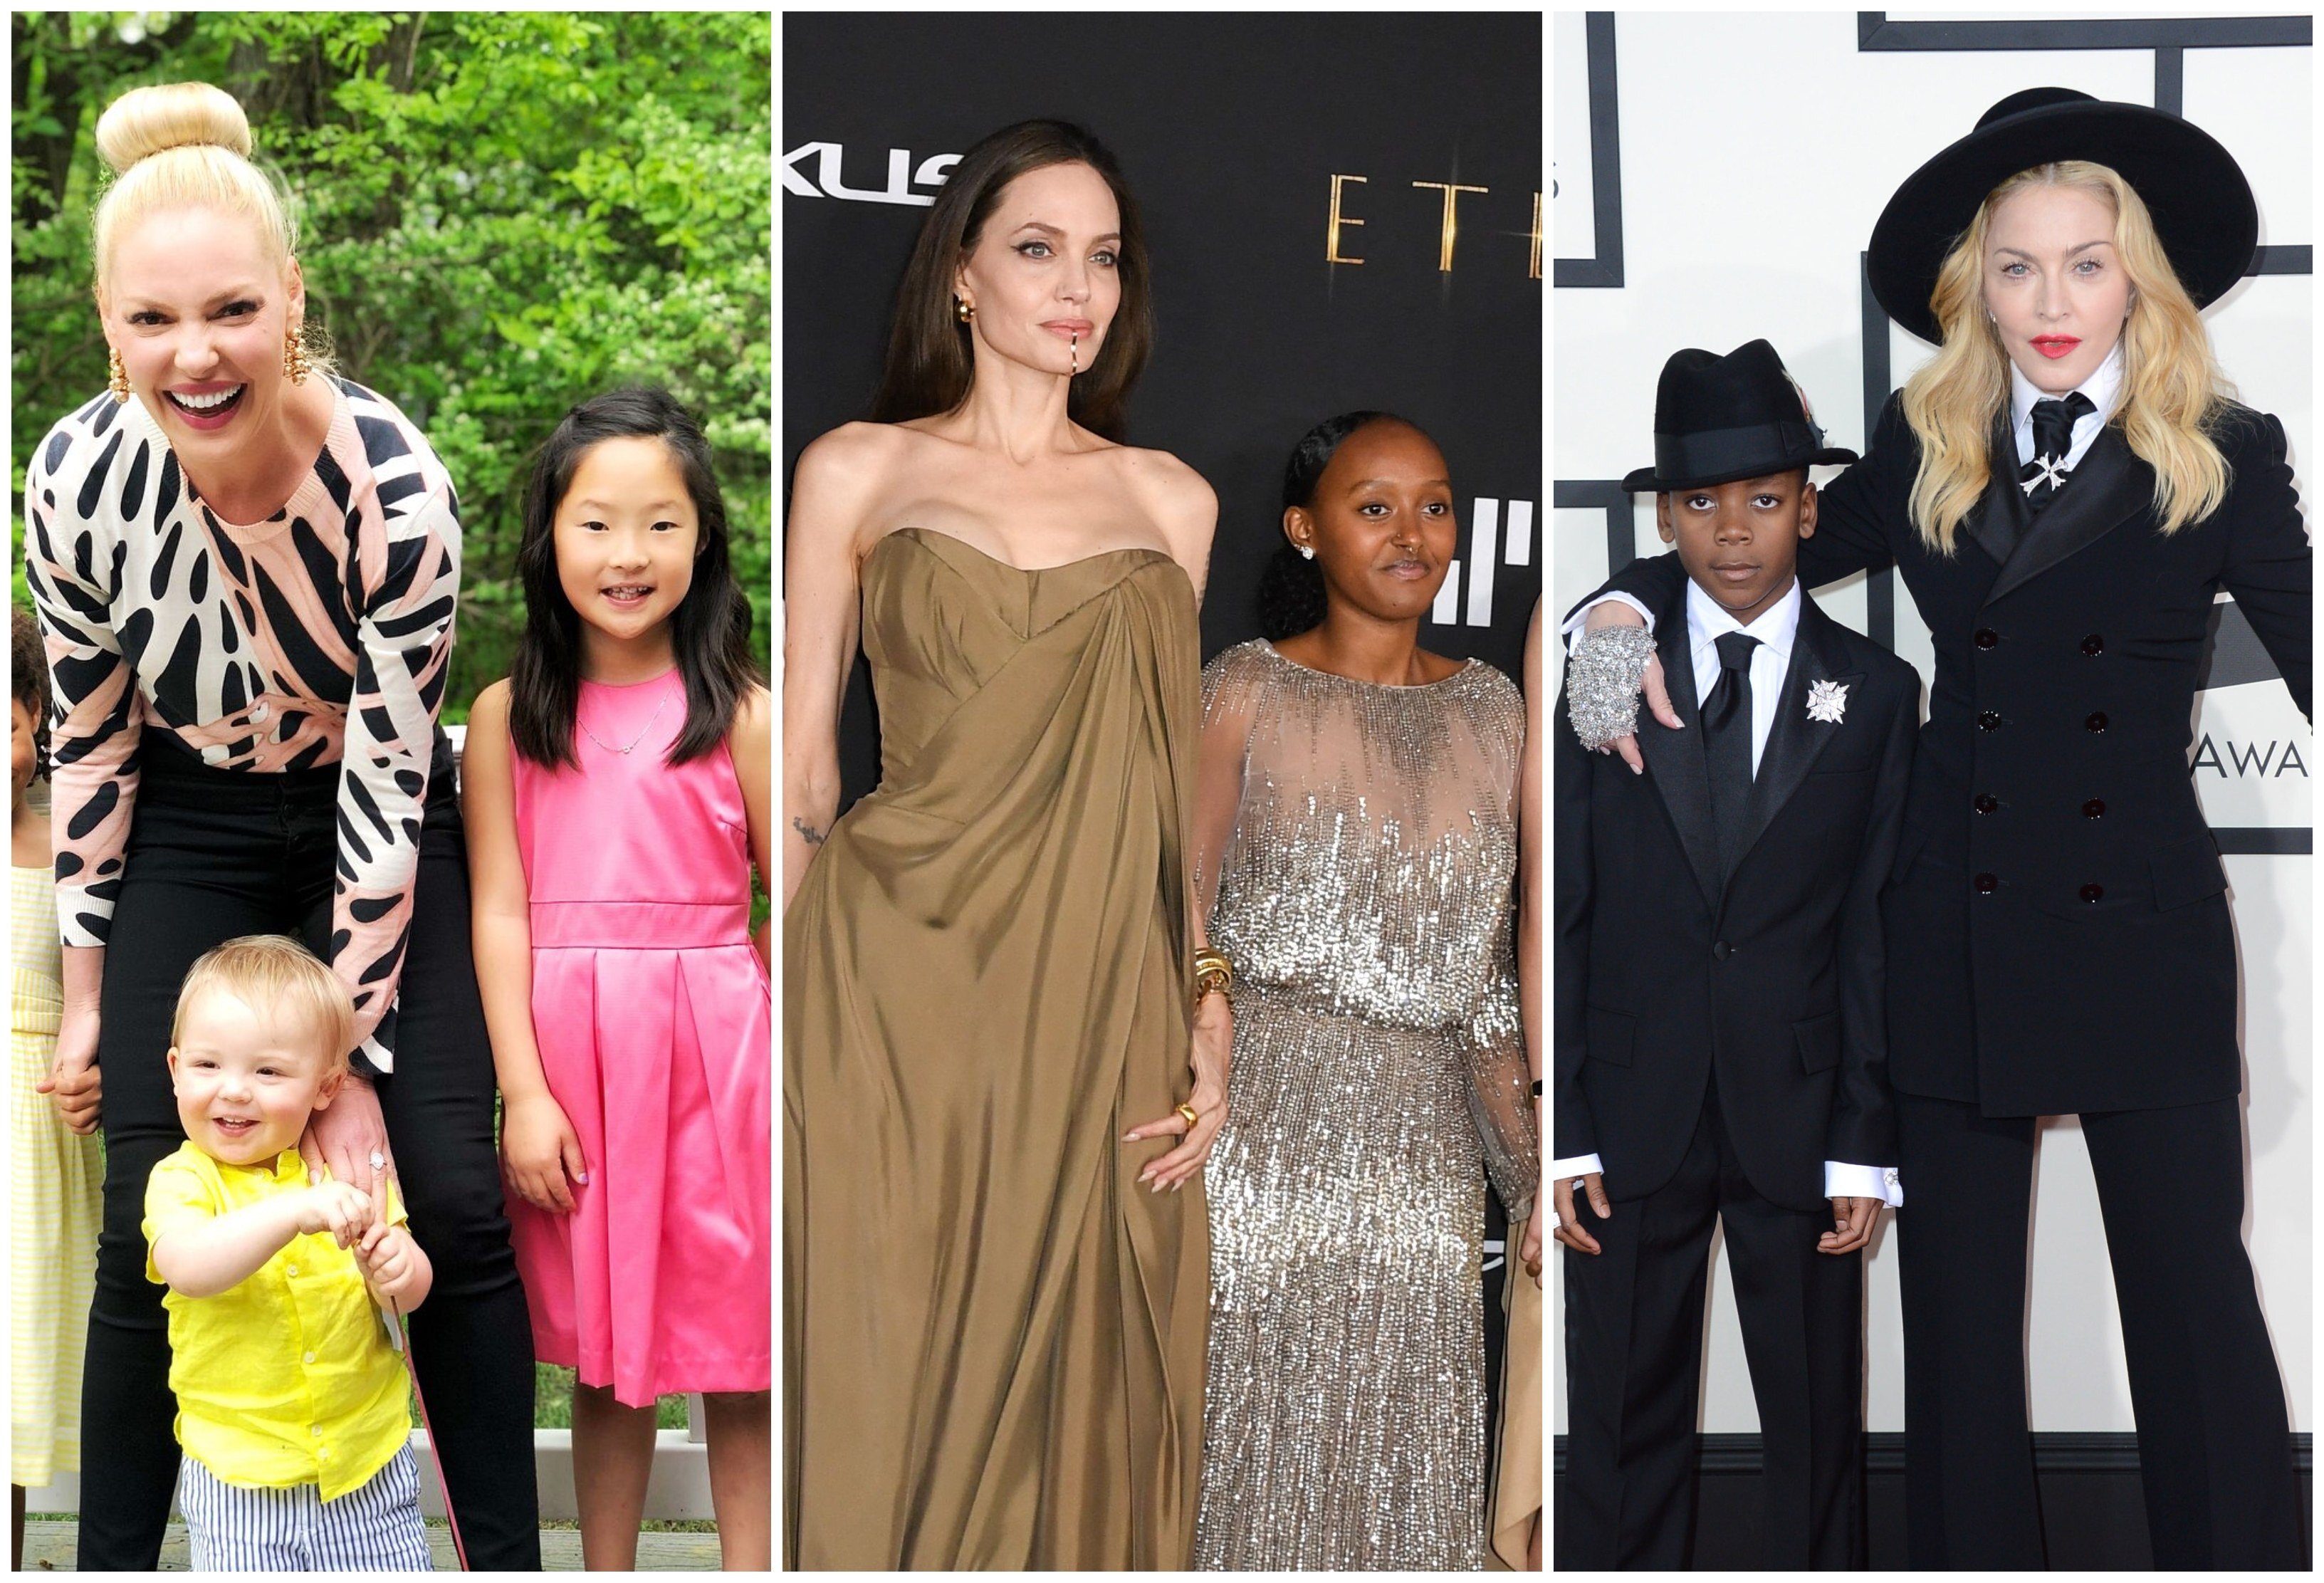 Katherine Heigl, Angelina Jolie and Madonna all adopted kids. Photos: @katherineheigl/Instagram, AFP, AP